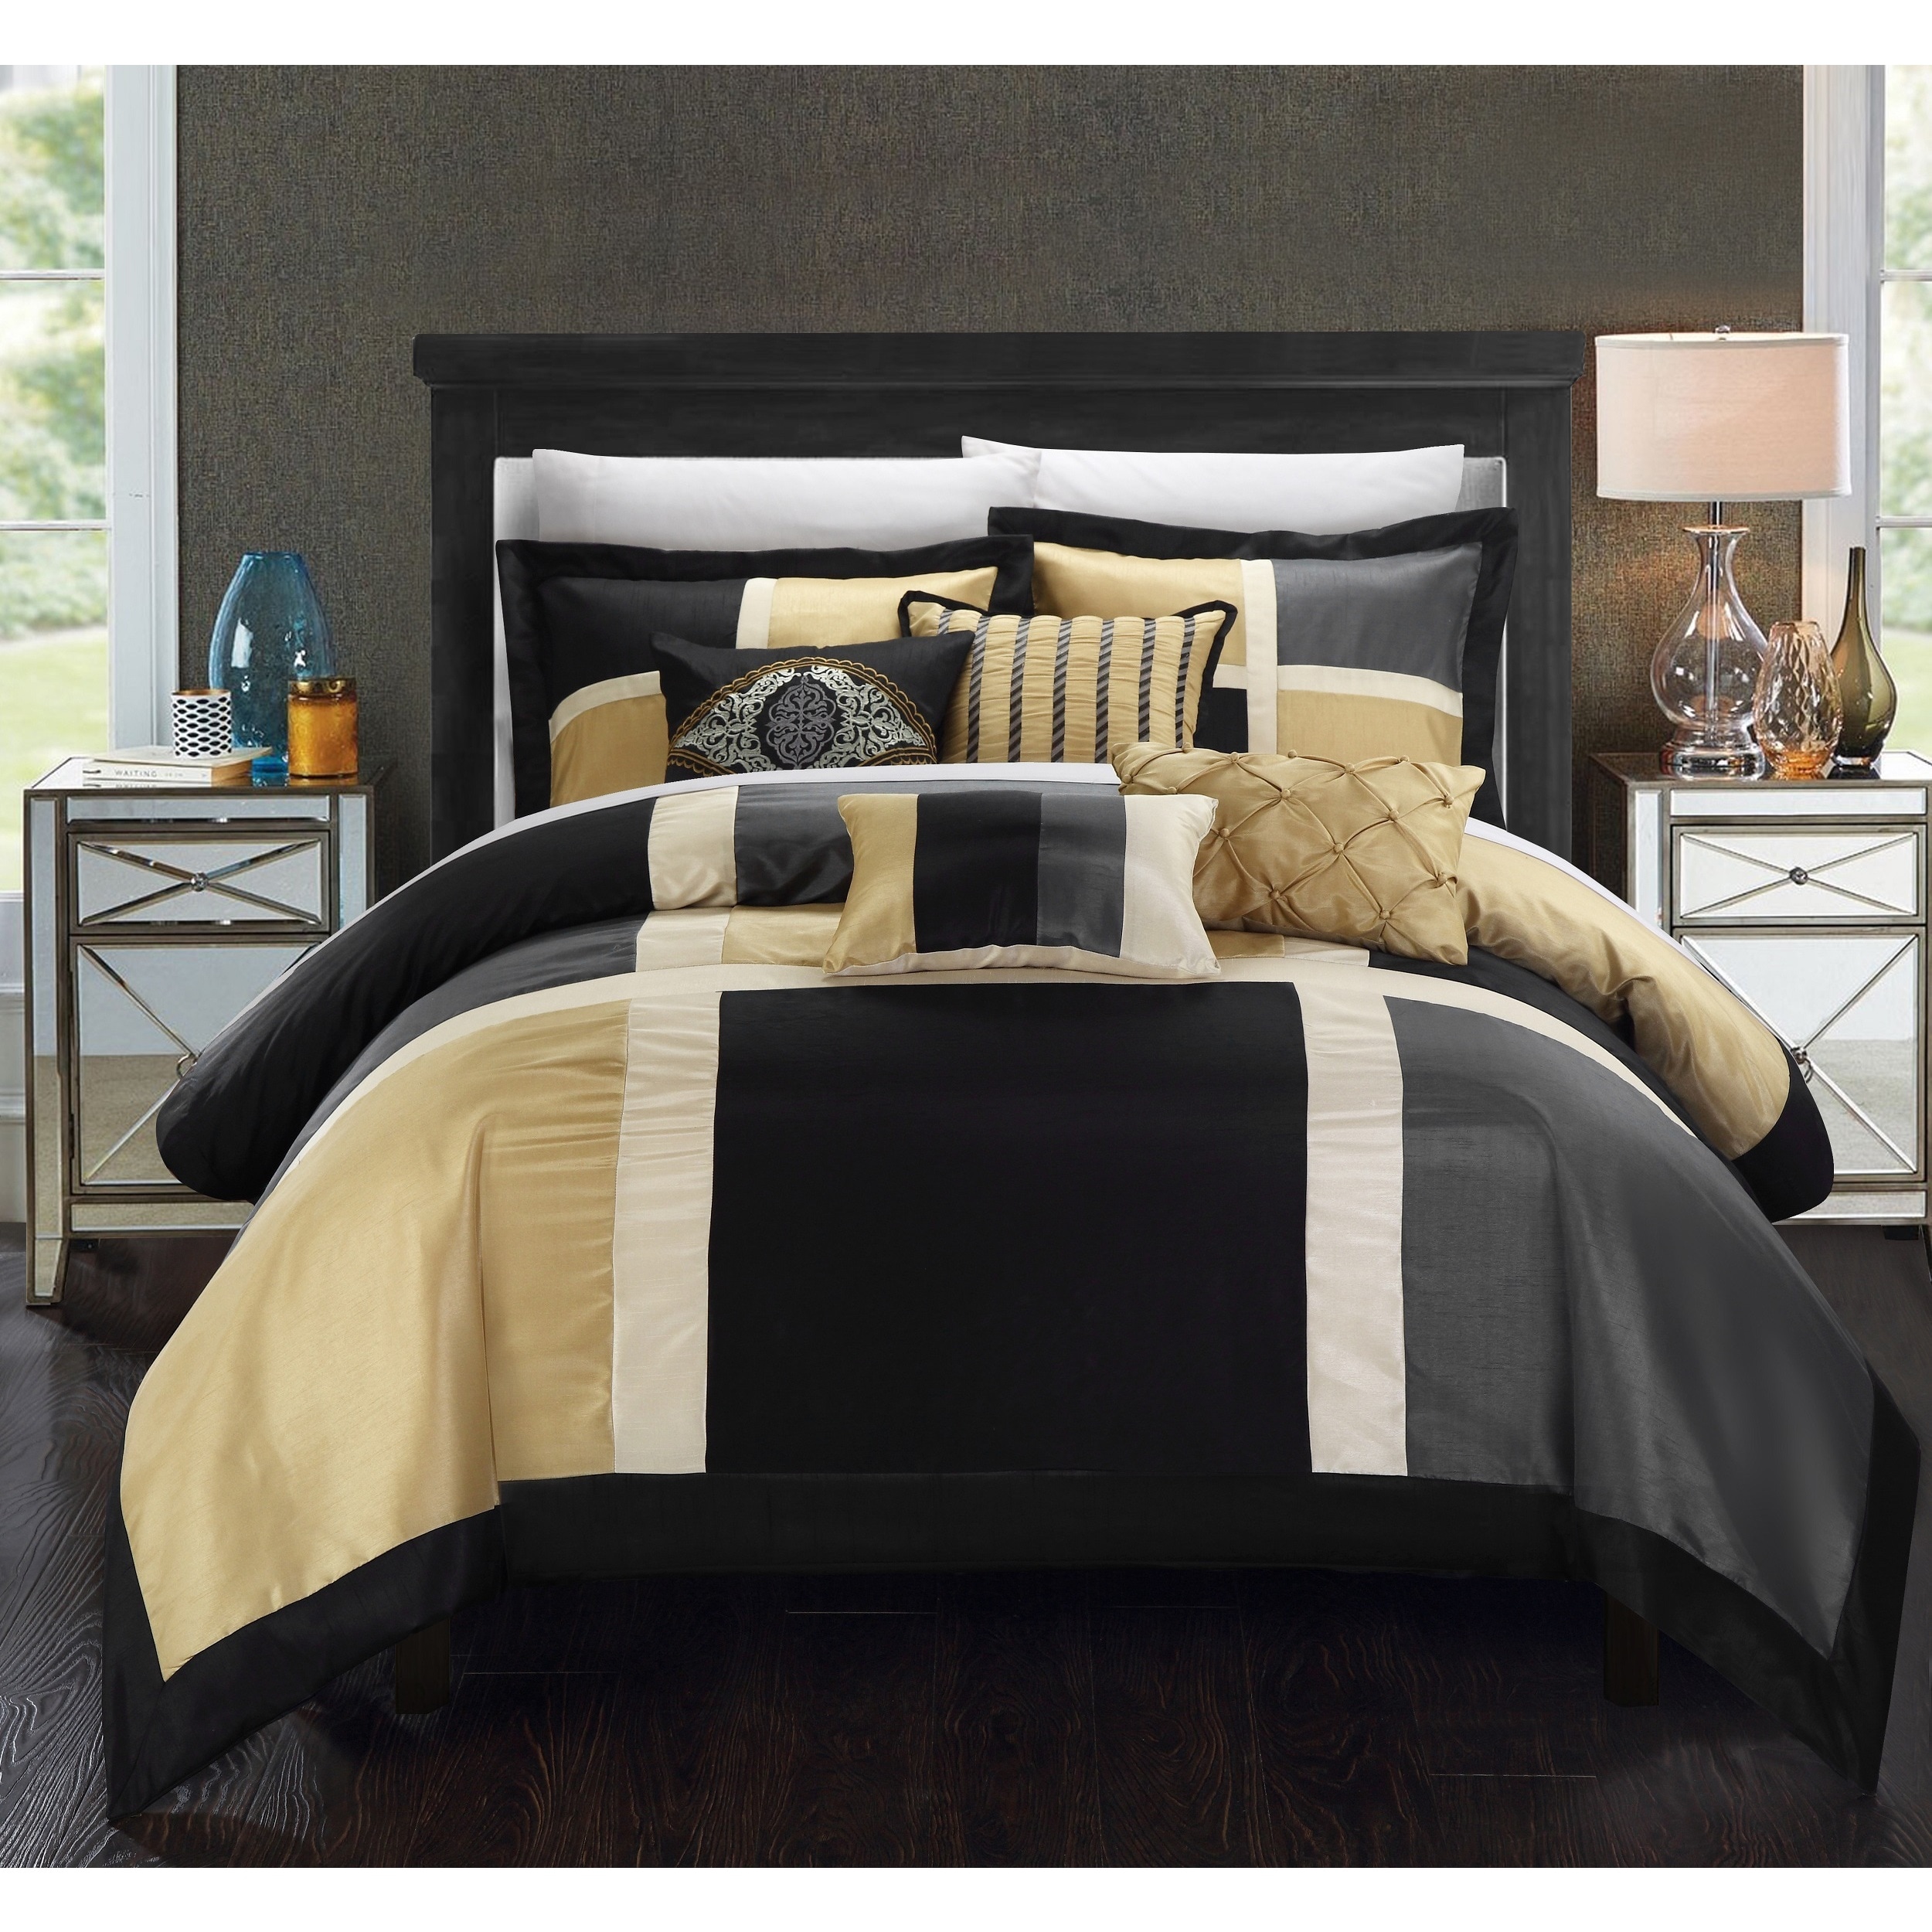 black and tan bedding sets